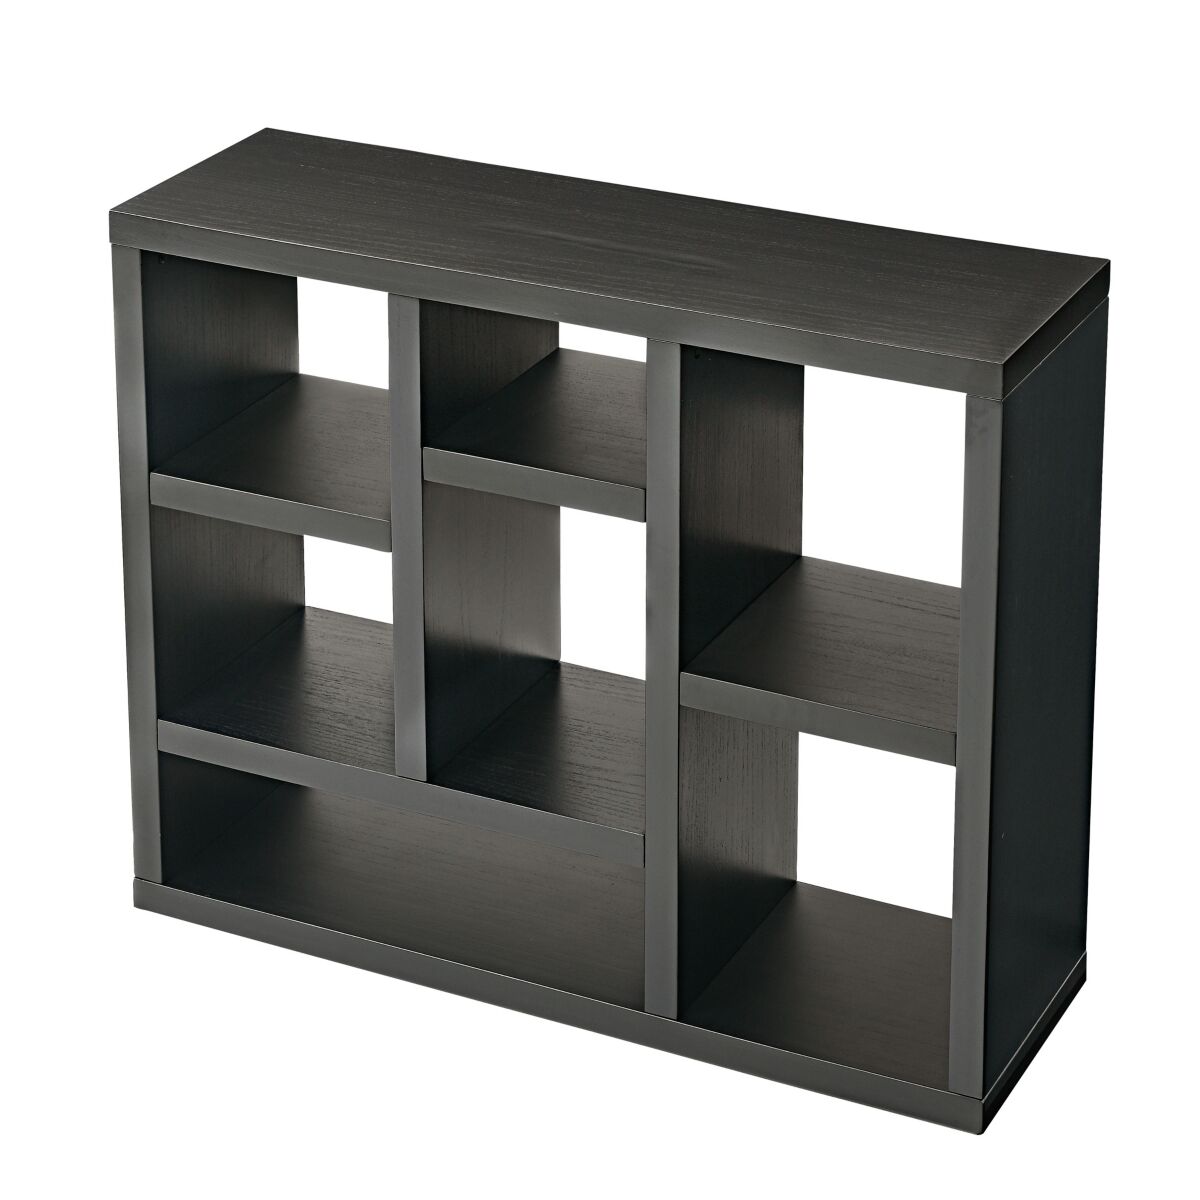 Simplie Fun Open Wooden Open Shelf Bookcase, Freestanding Display Storage Cabinet with 7 Cube Storage Spaces, Floor Standing Bookshelf, Entryway, Living Room Stor